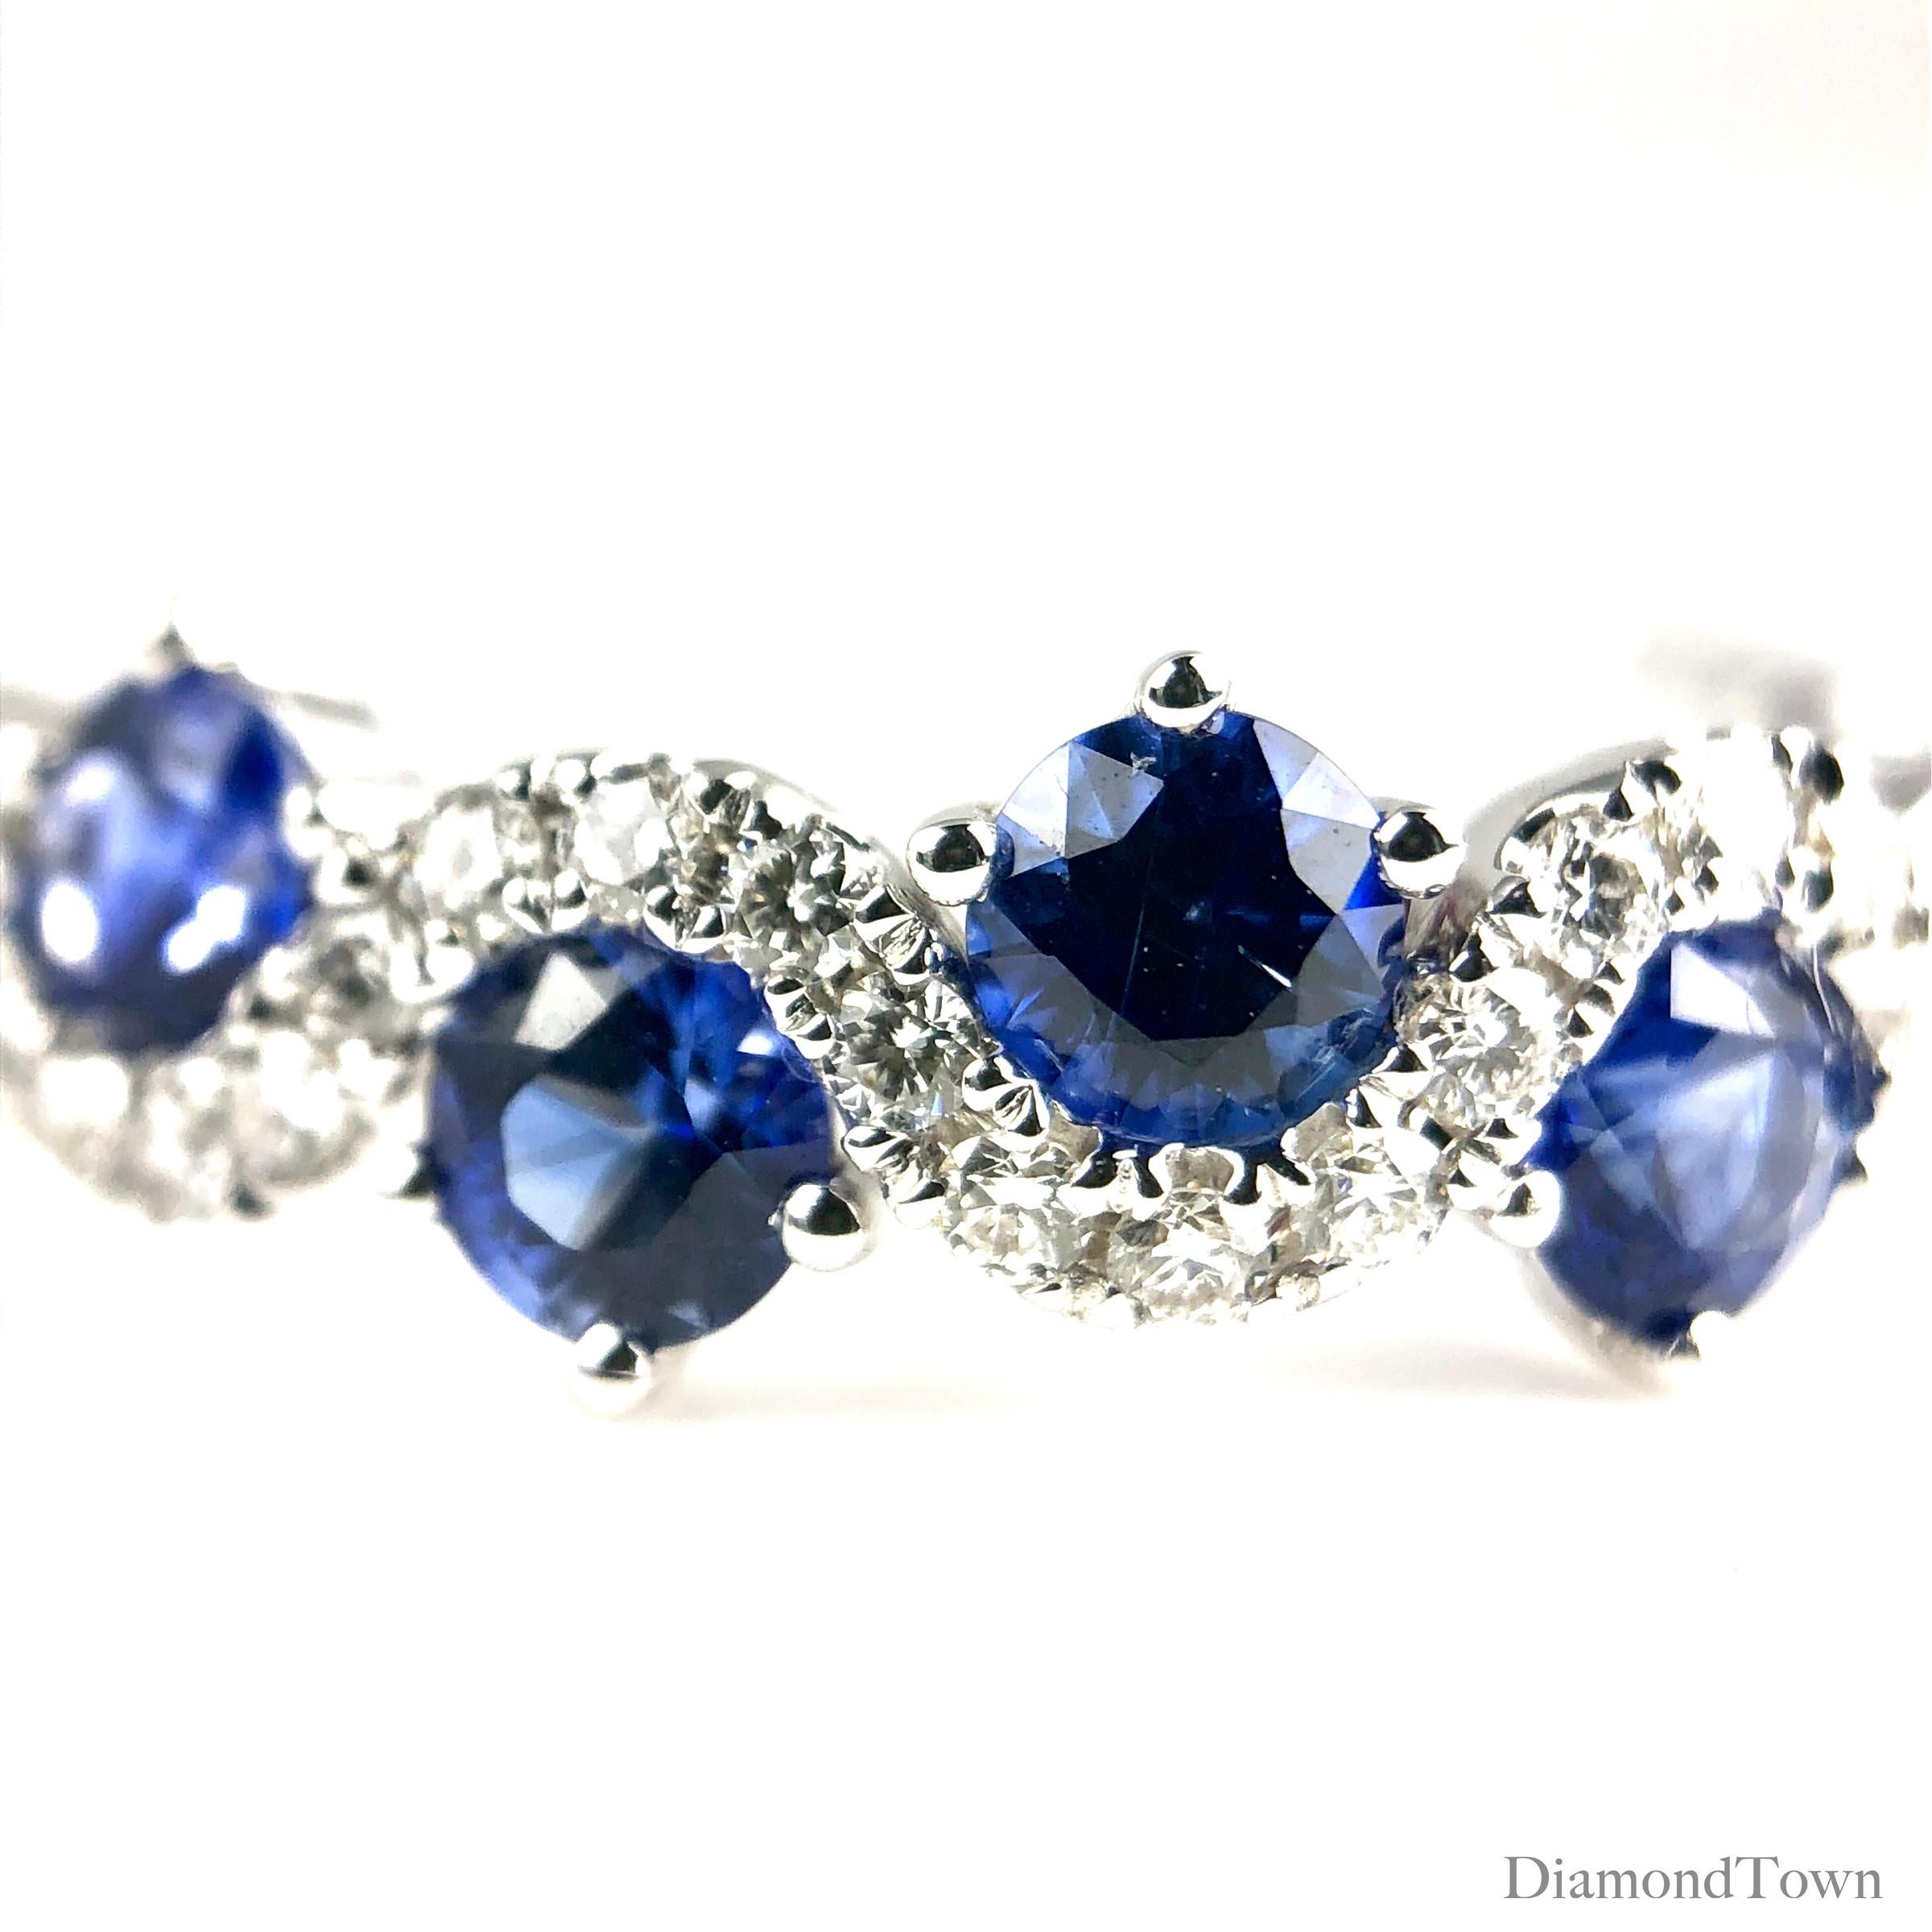 Contemporary DiamondTown 1.65 Carat Vivid Blue Sapphire and Diamond Lever-Back Earrings